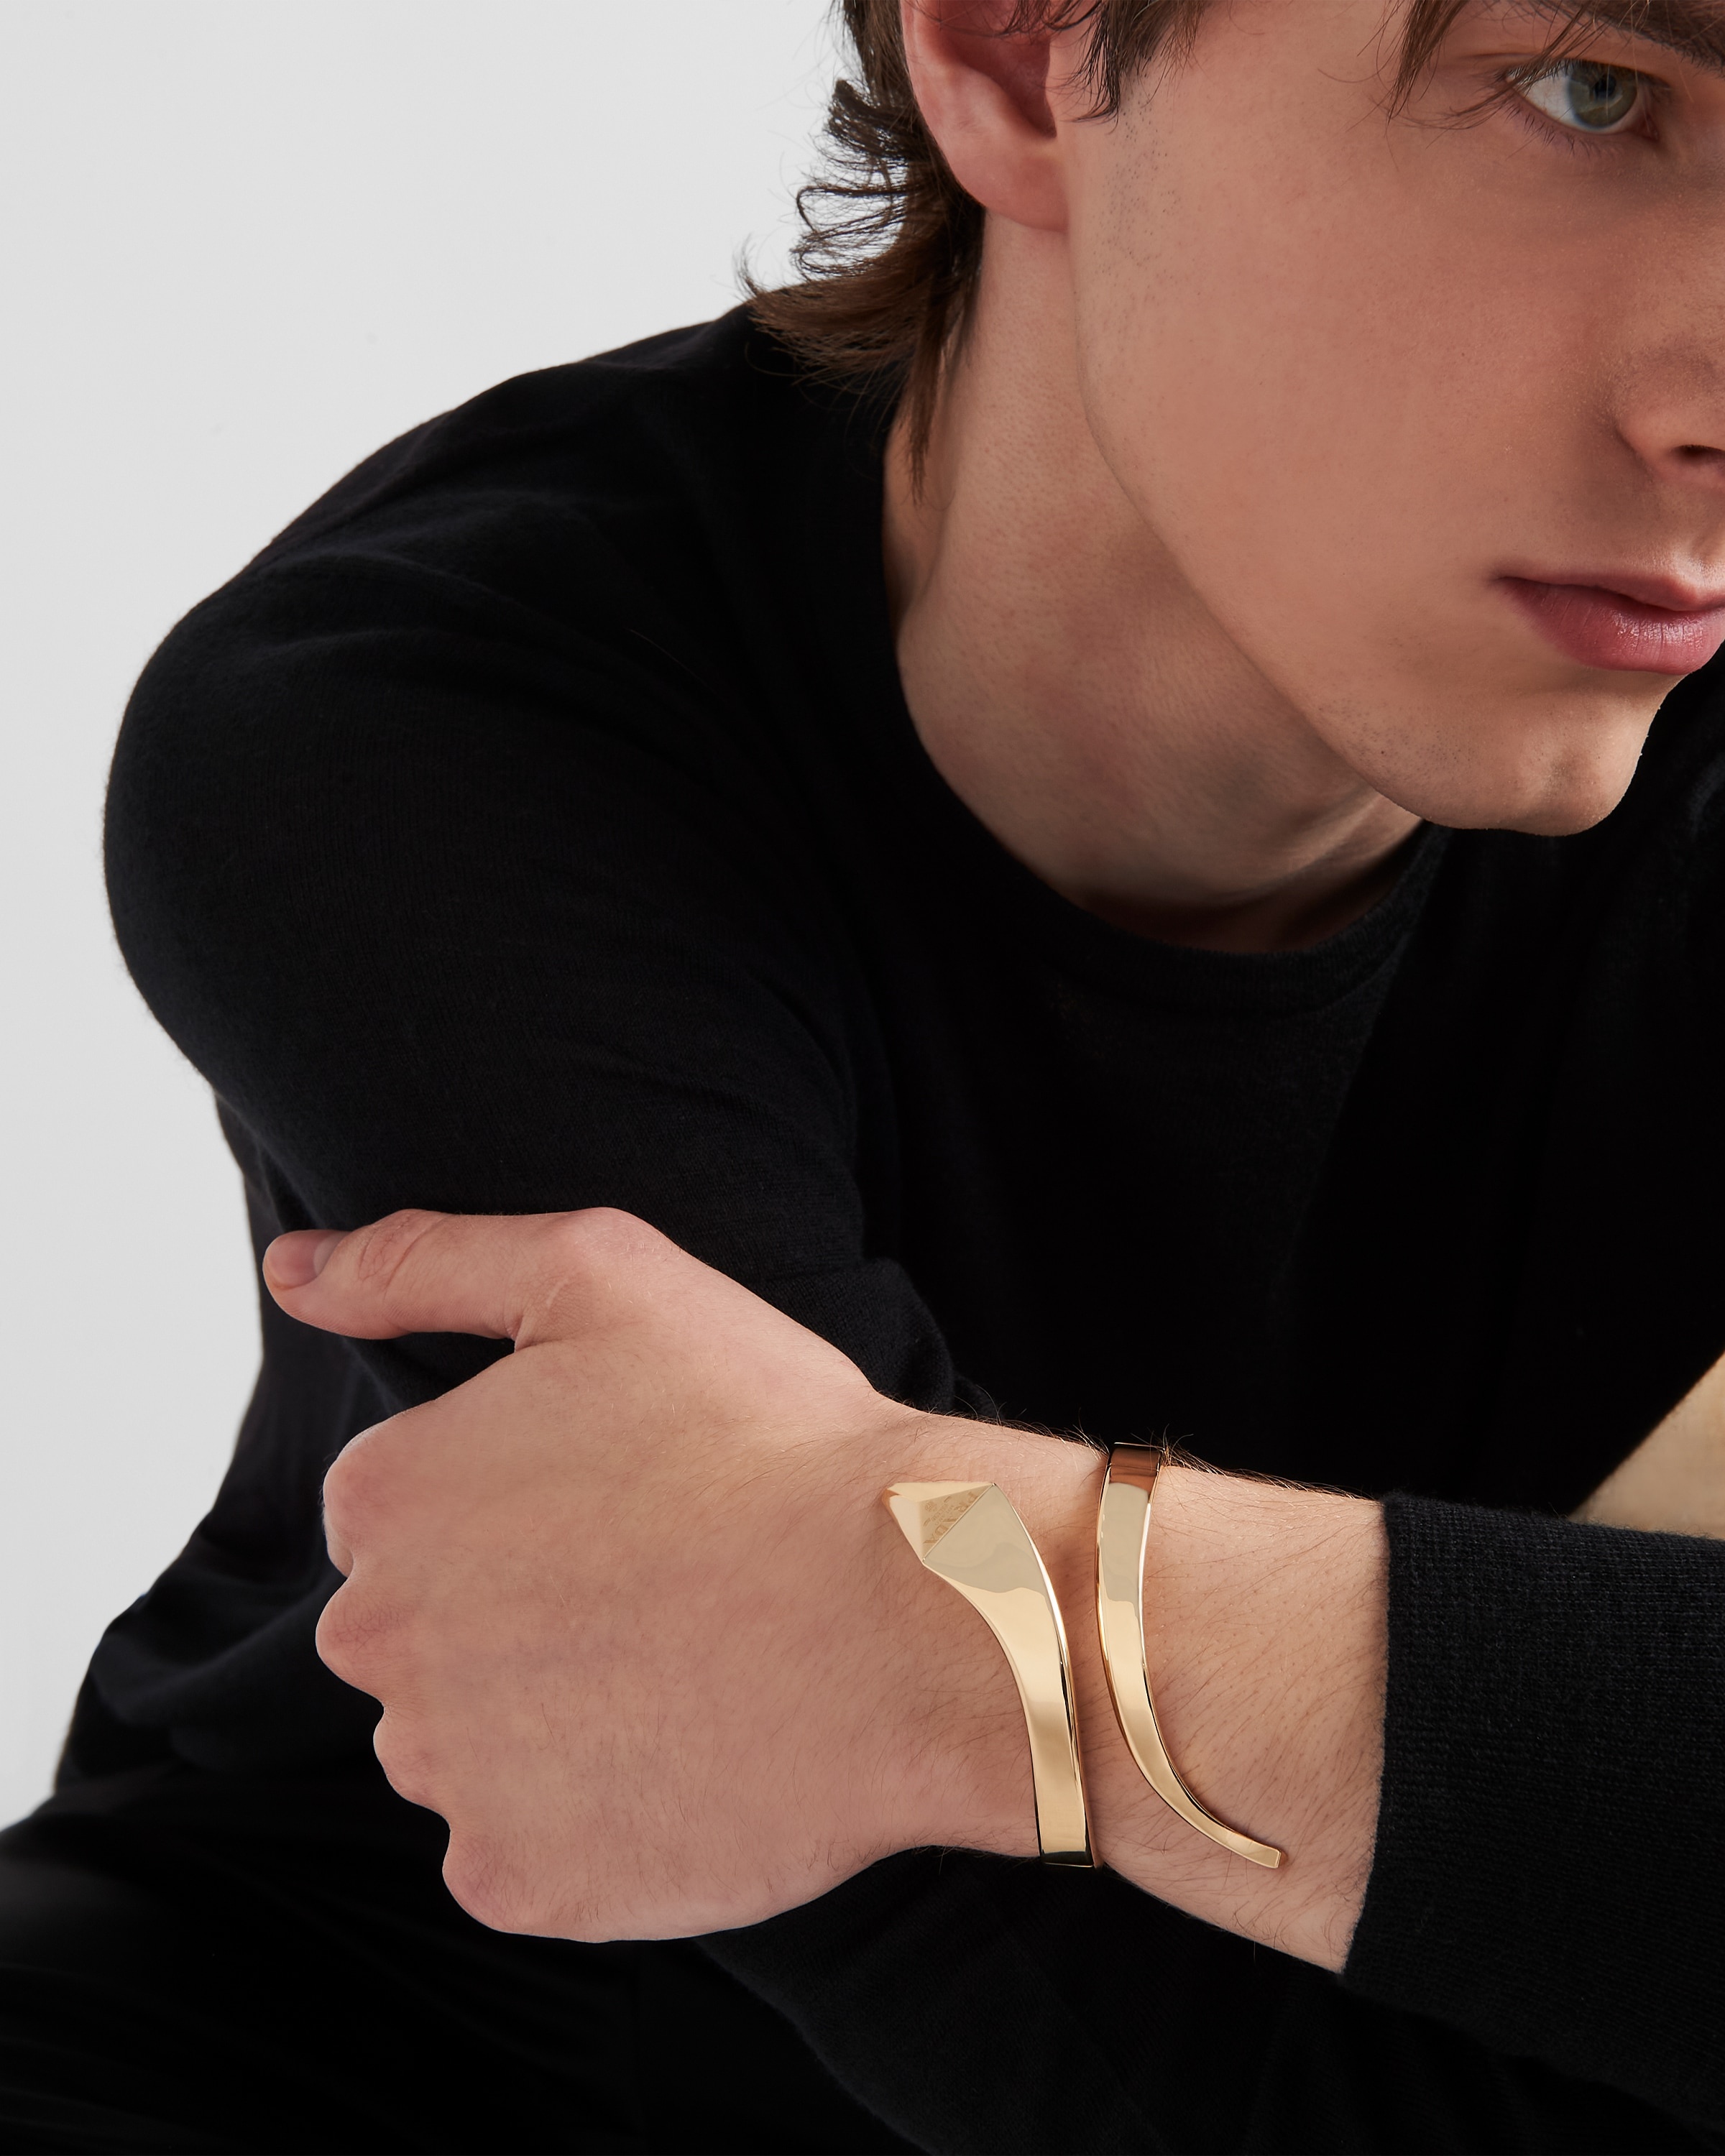 Prada leather logo-patch bracelet - Gold